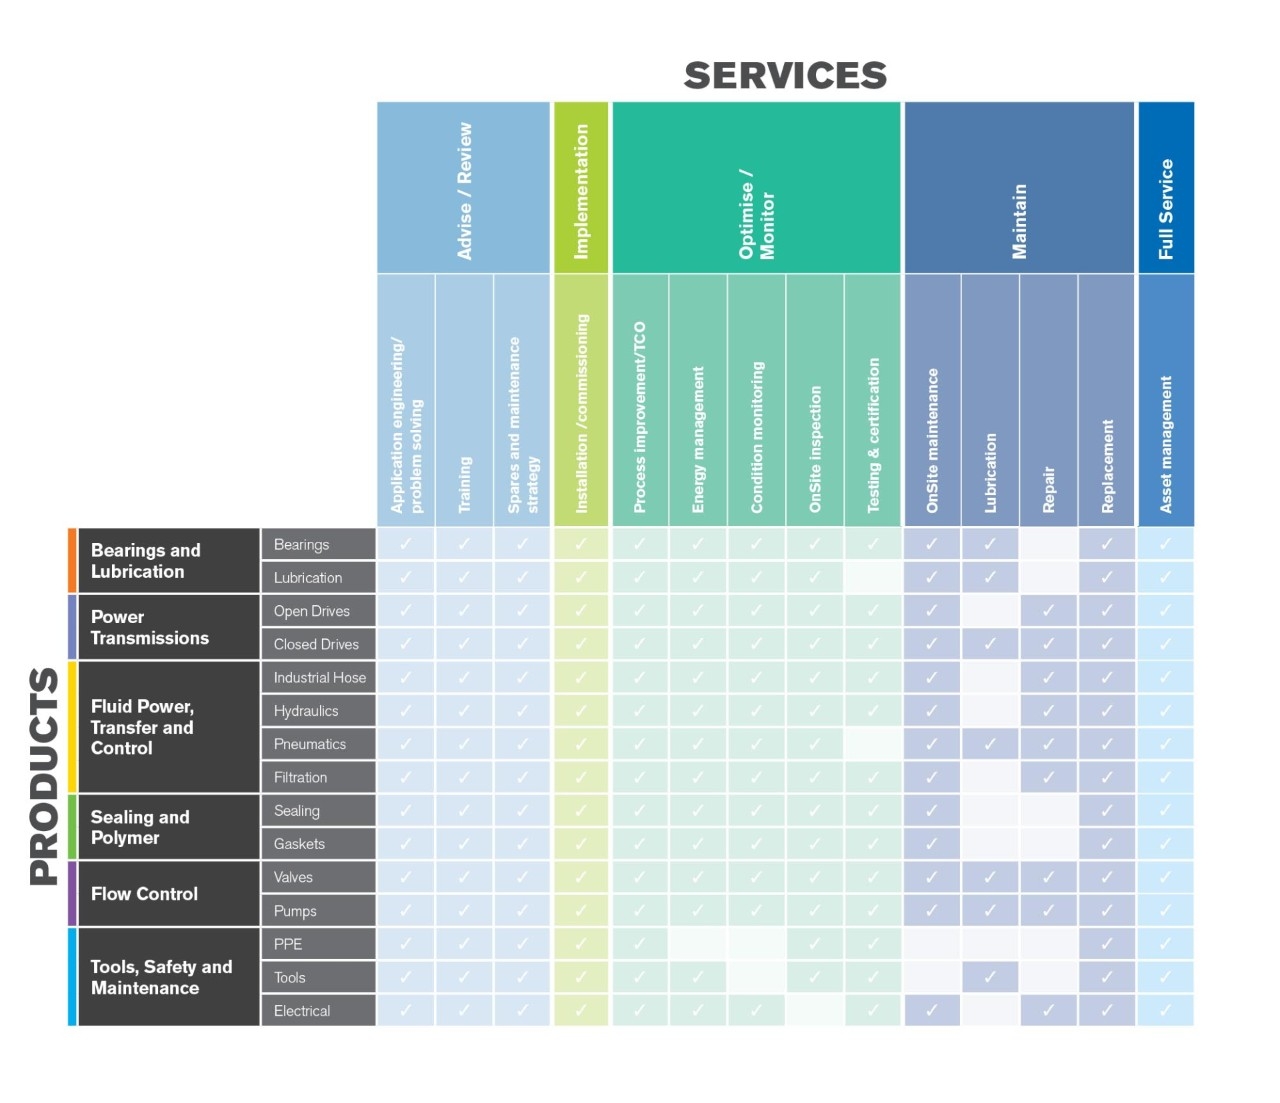 Product and Service Matrix